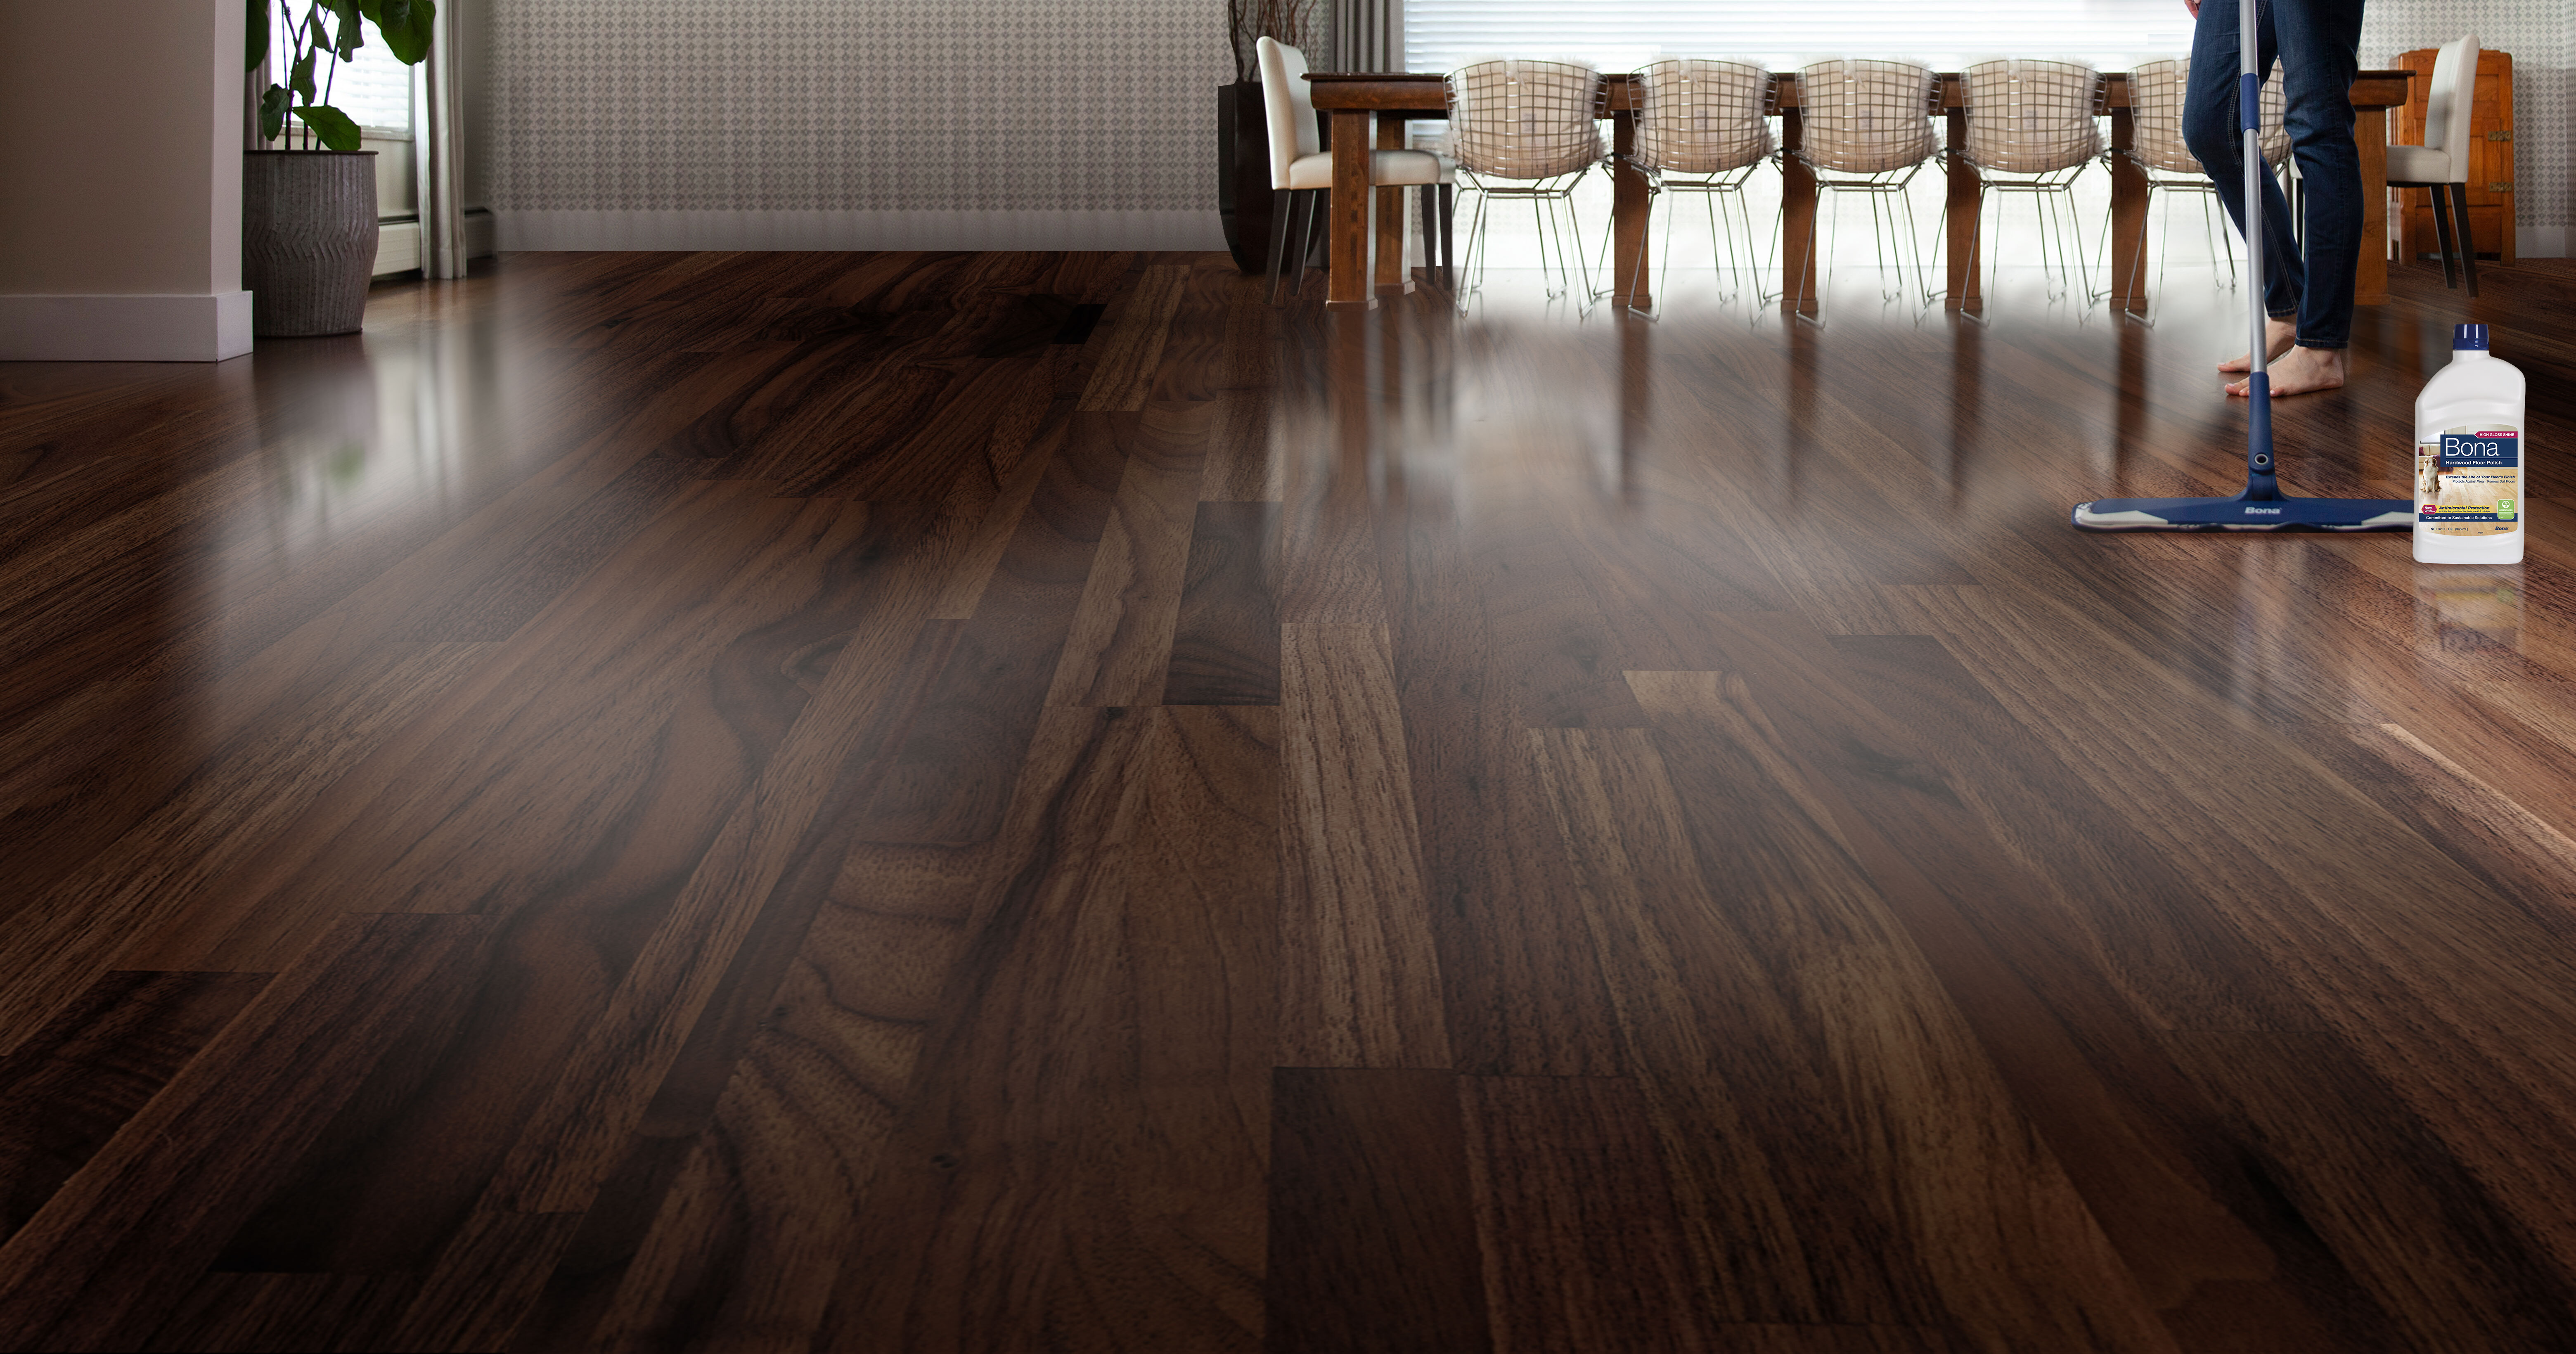 How To Polish Hardwood Floors Do S And, How To Keep Hardwood Floors Clean And Shiny